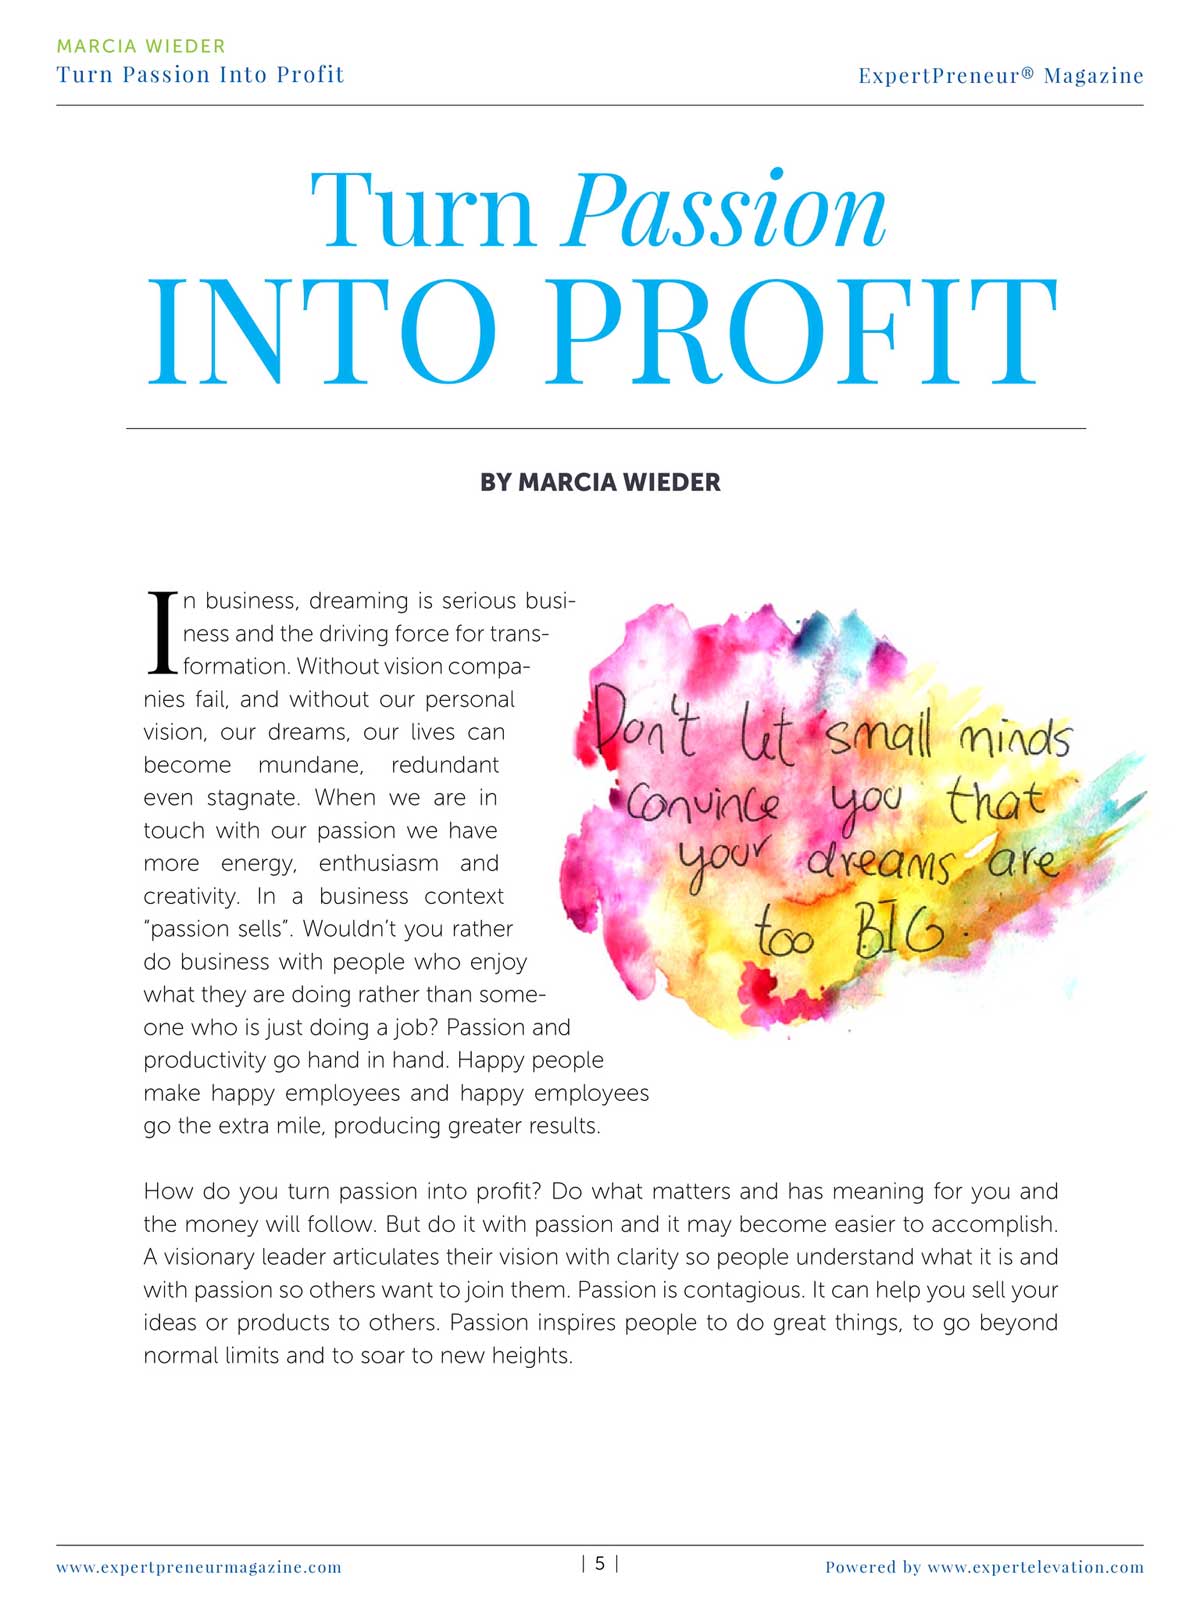 ExpertPrenuer Magazine - Turn Passion Into Profit (Page 1)